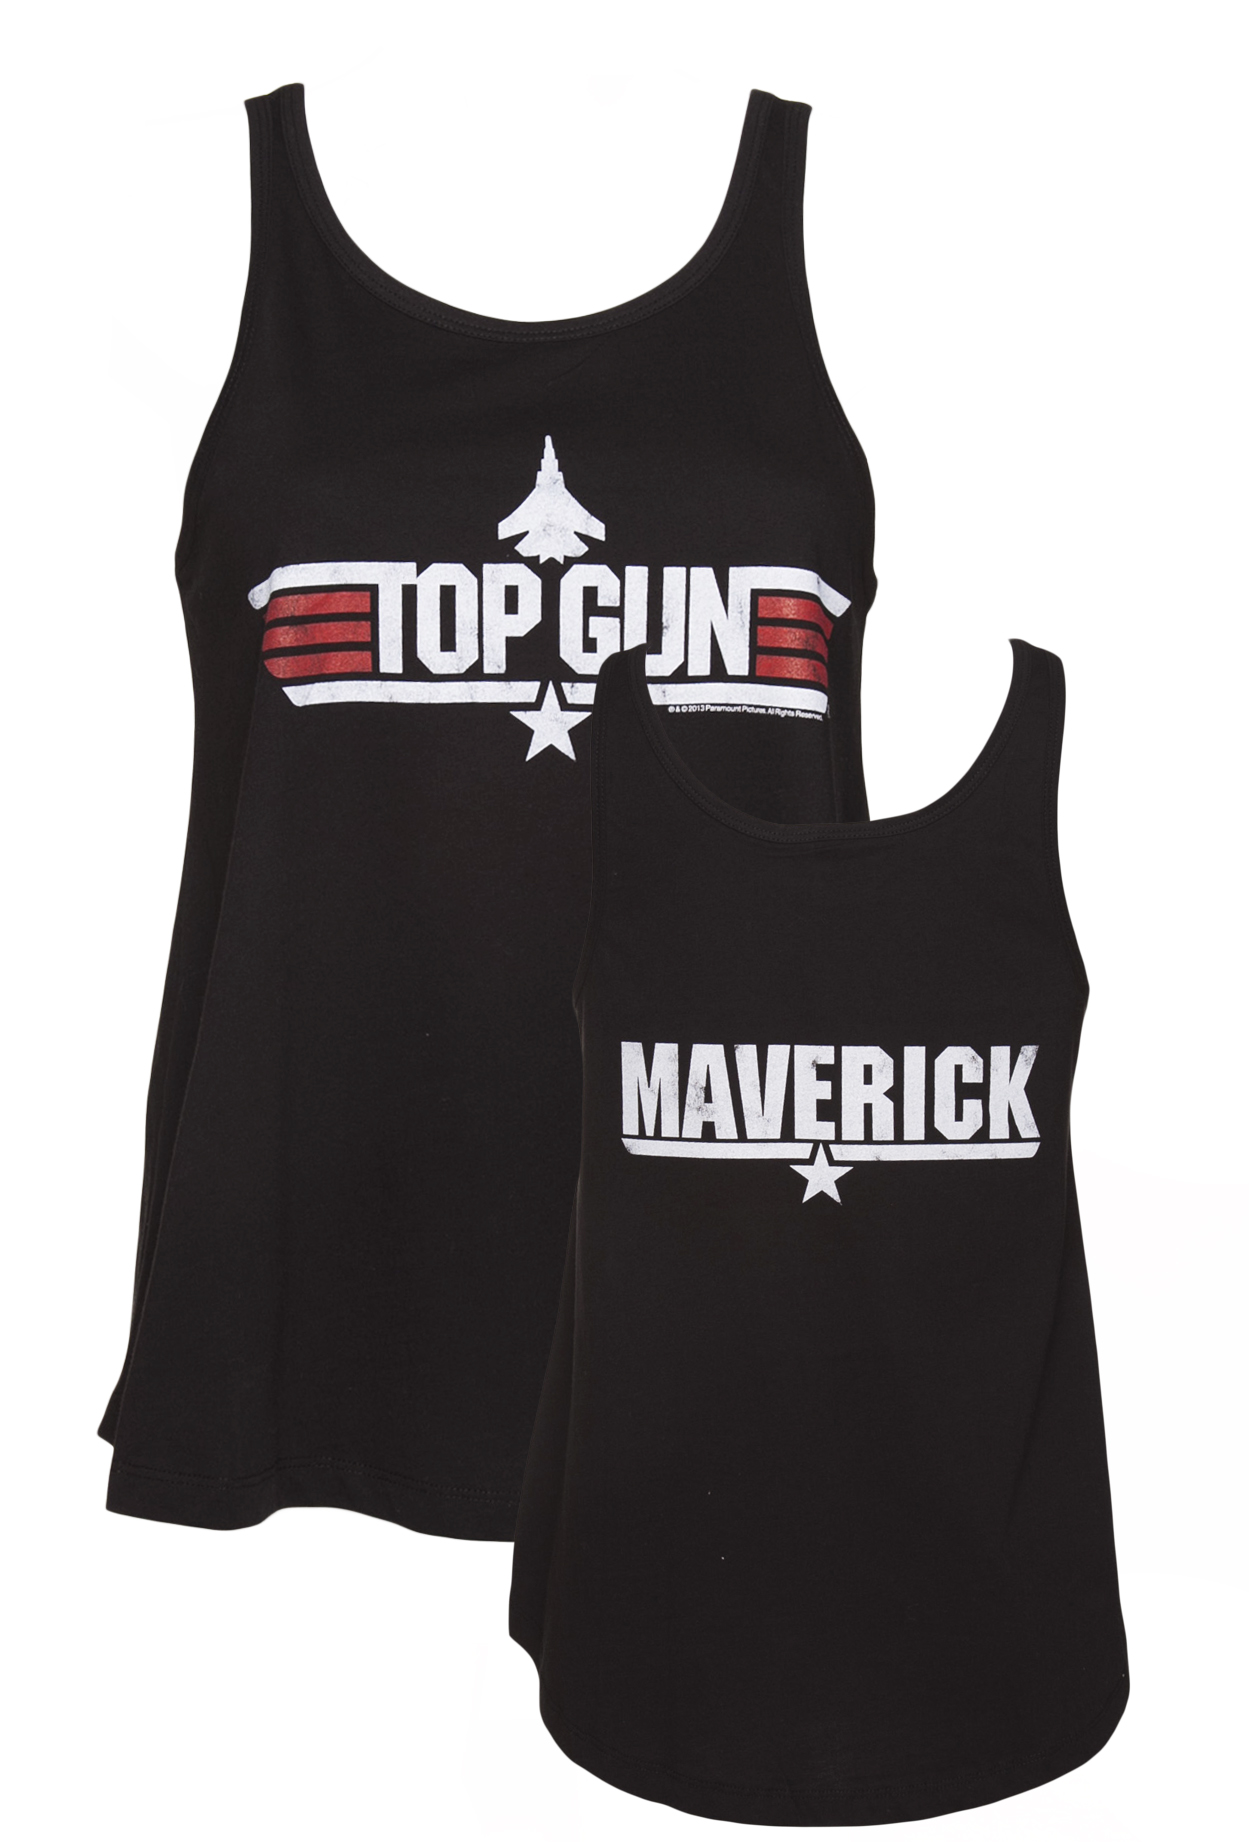 Ladies Black Top Gun Maverick Swing Vest